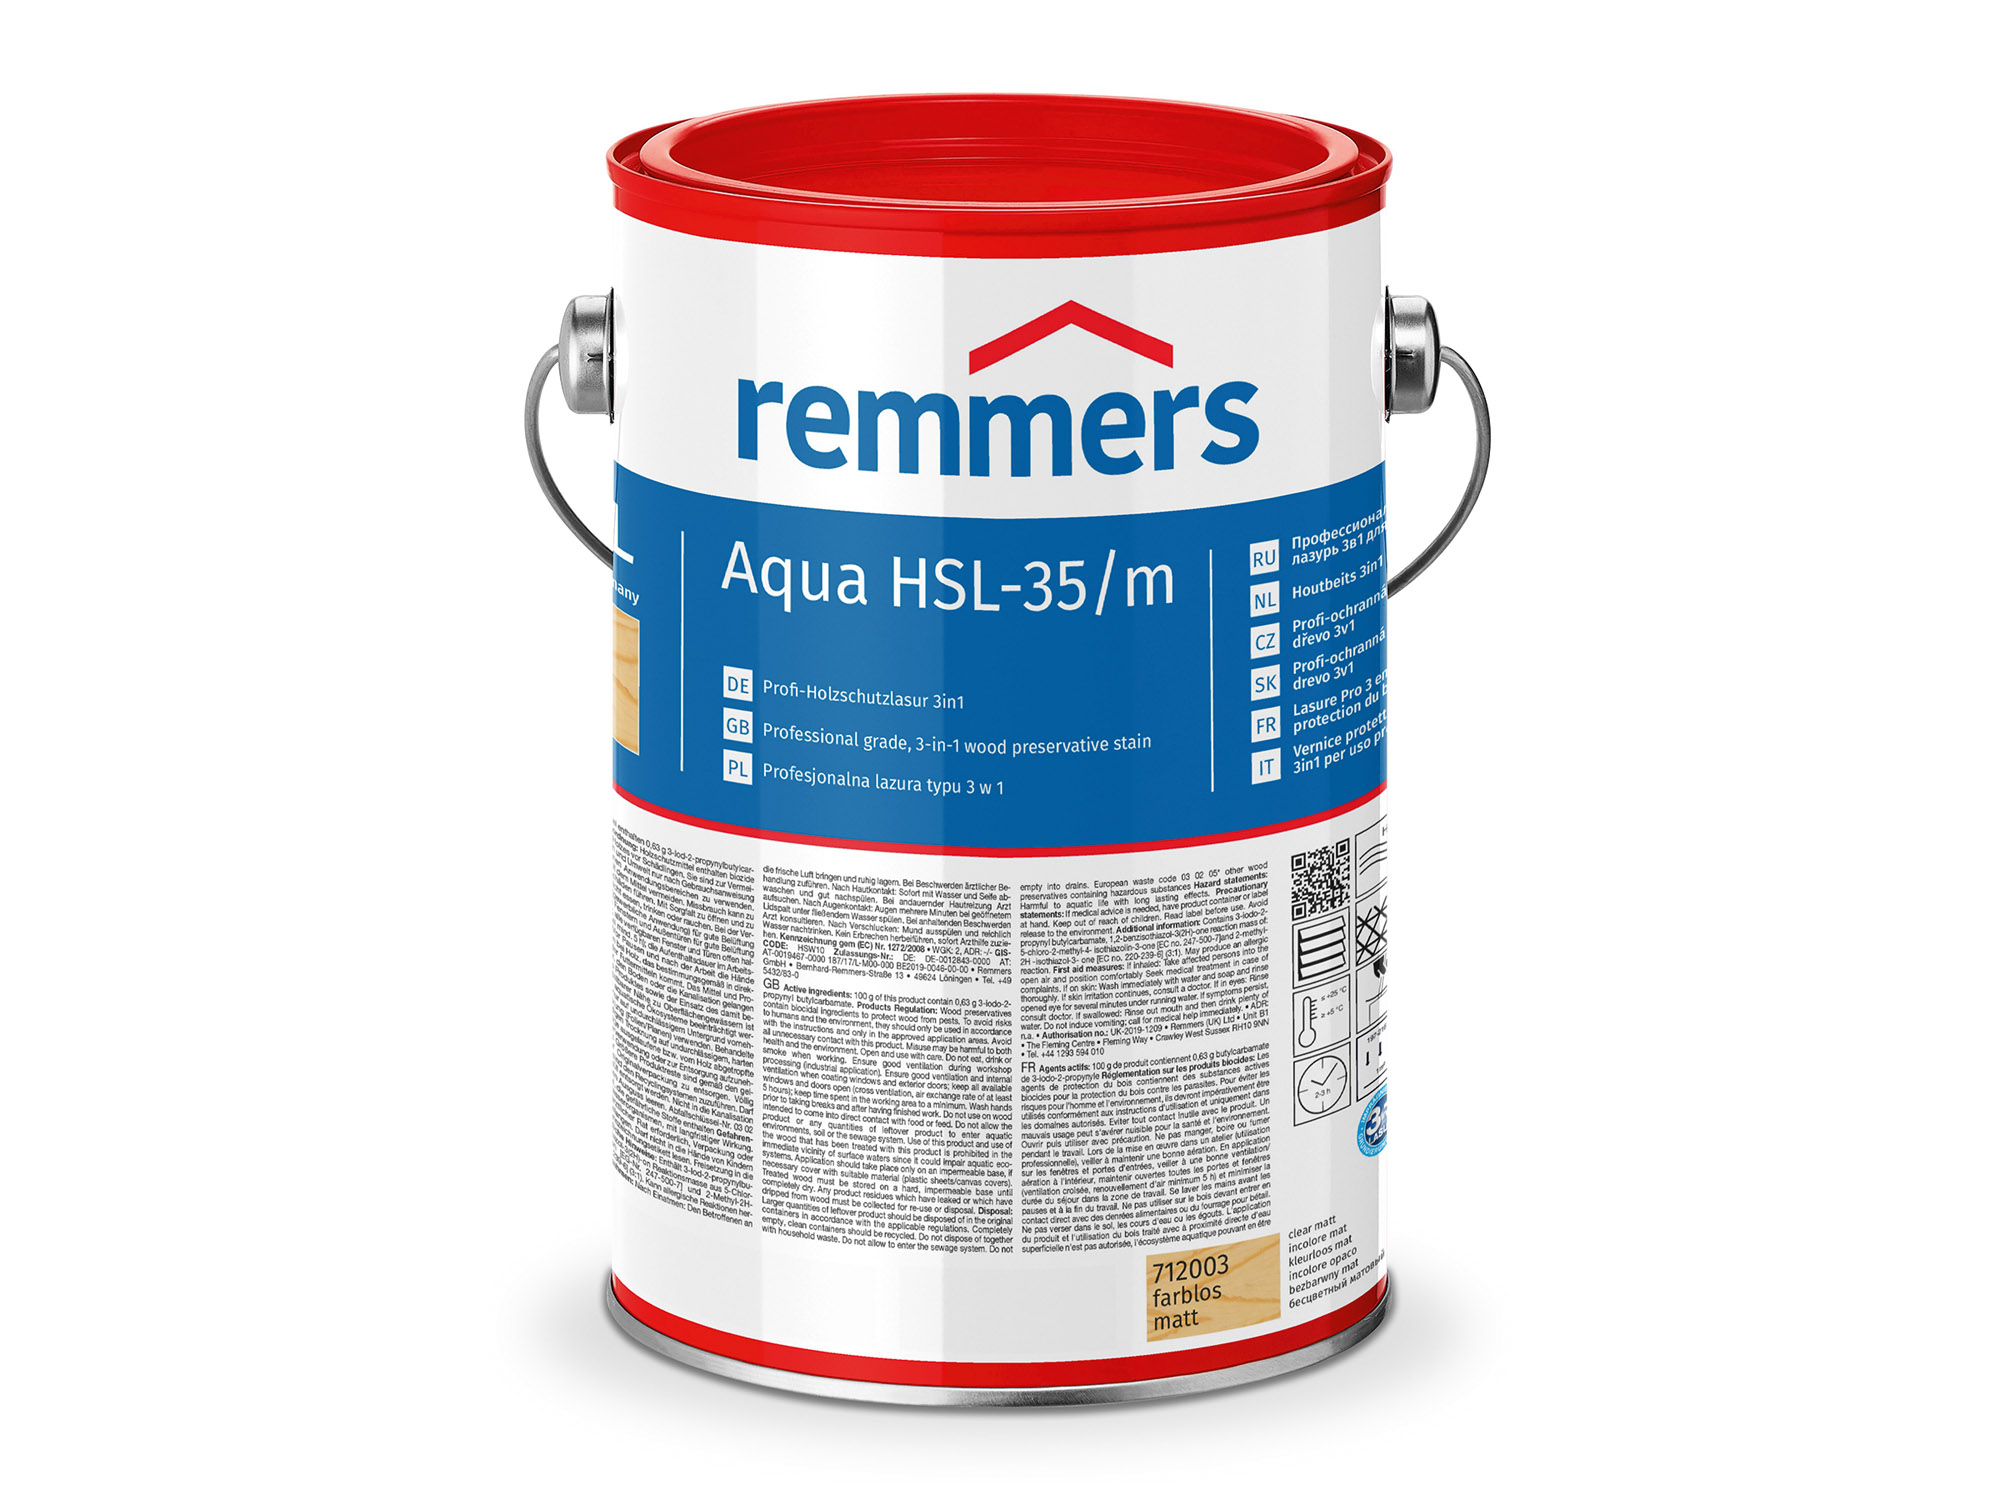 Remmers Aqua HSL-35/m Douglas